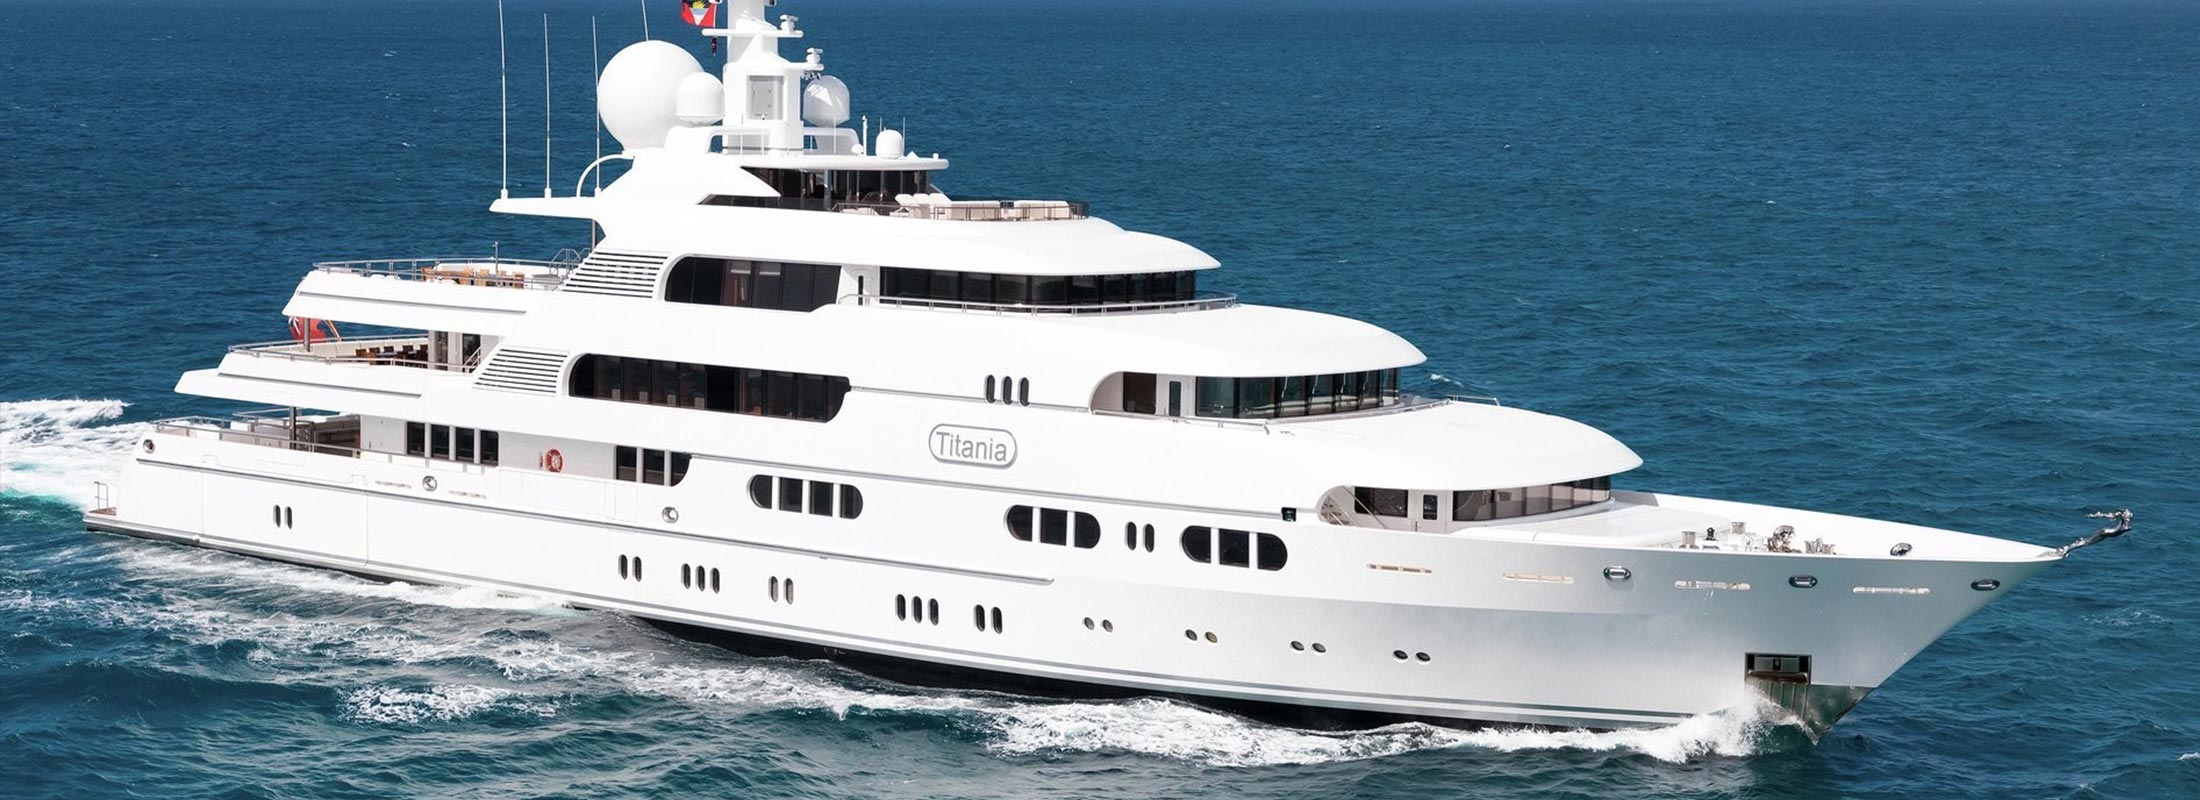 Titania-luxury-motor-yacht-charter-a-yacht-slicer-1.jpg